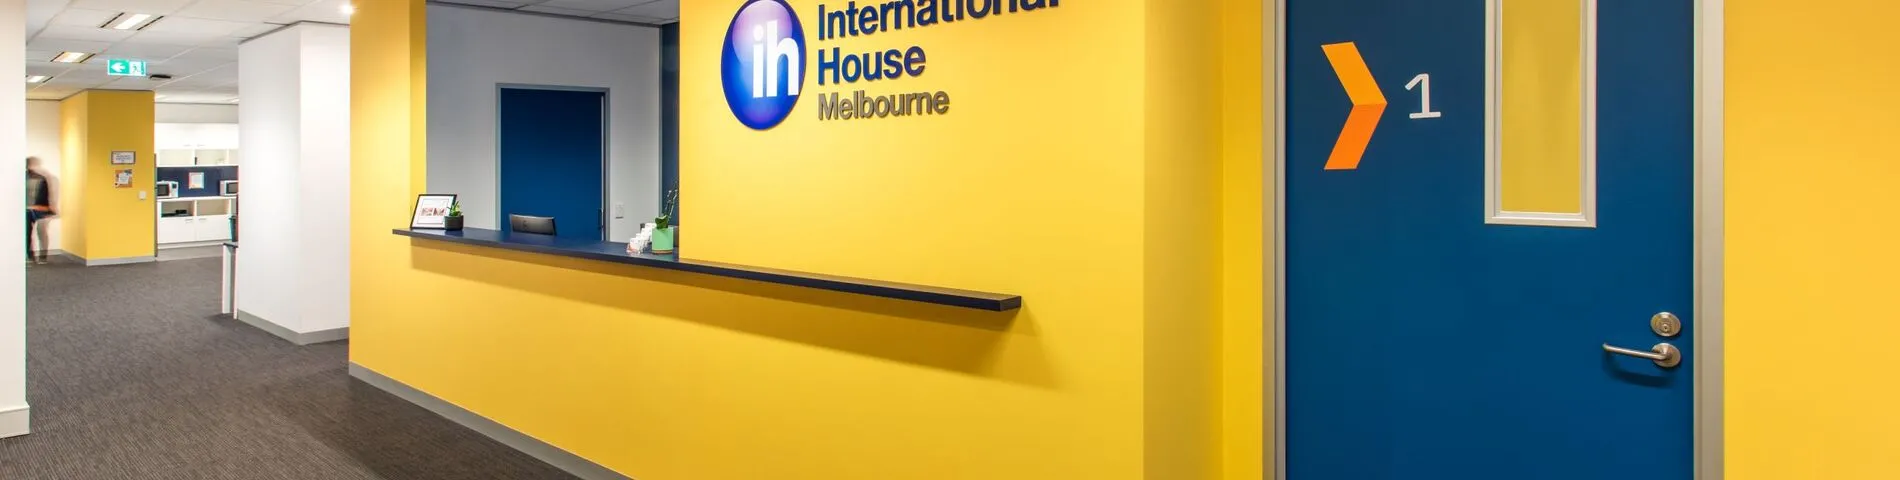 International House 사진 1